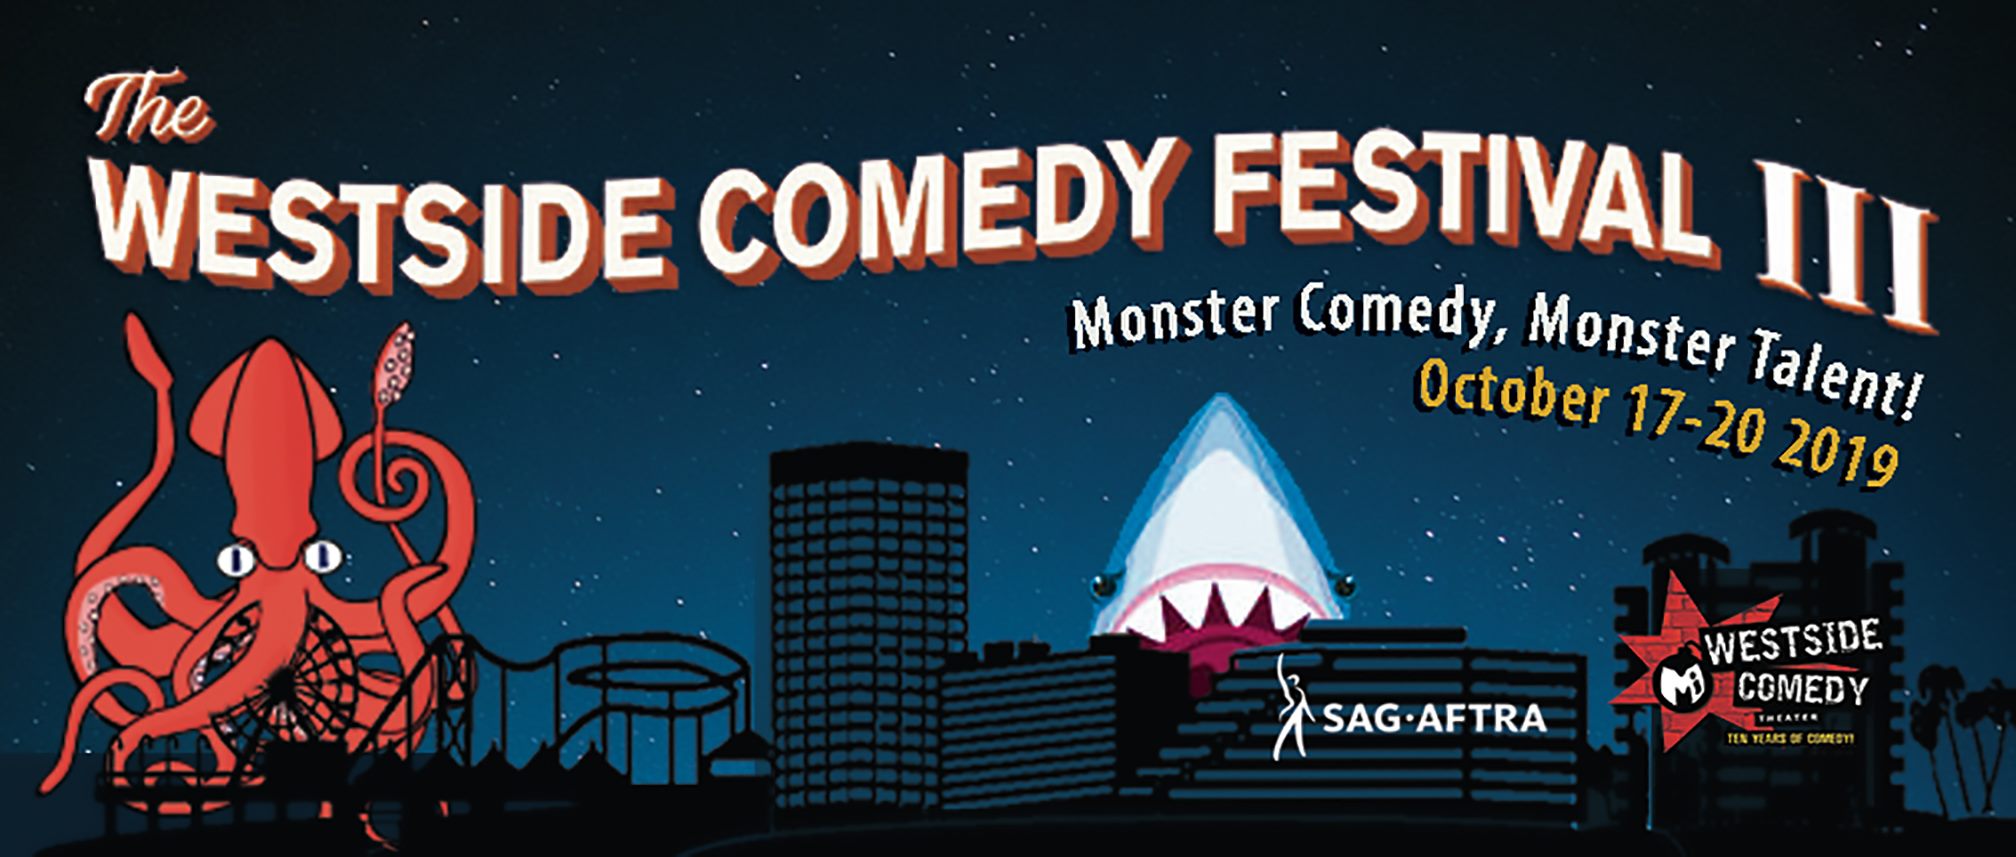 The Westside Comedy Festival